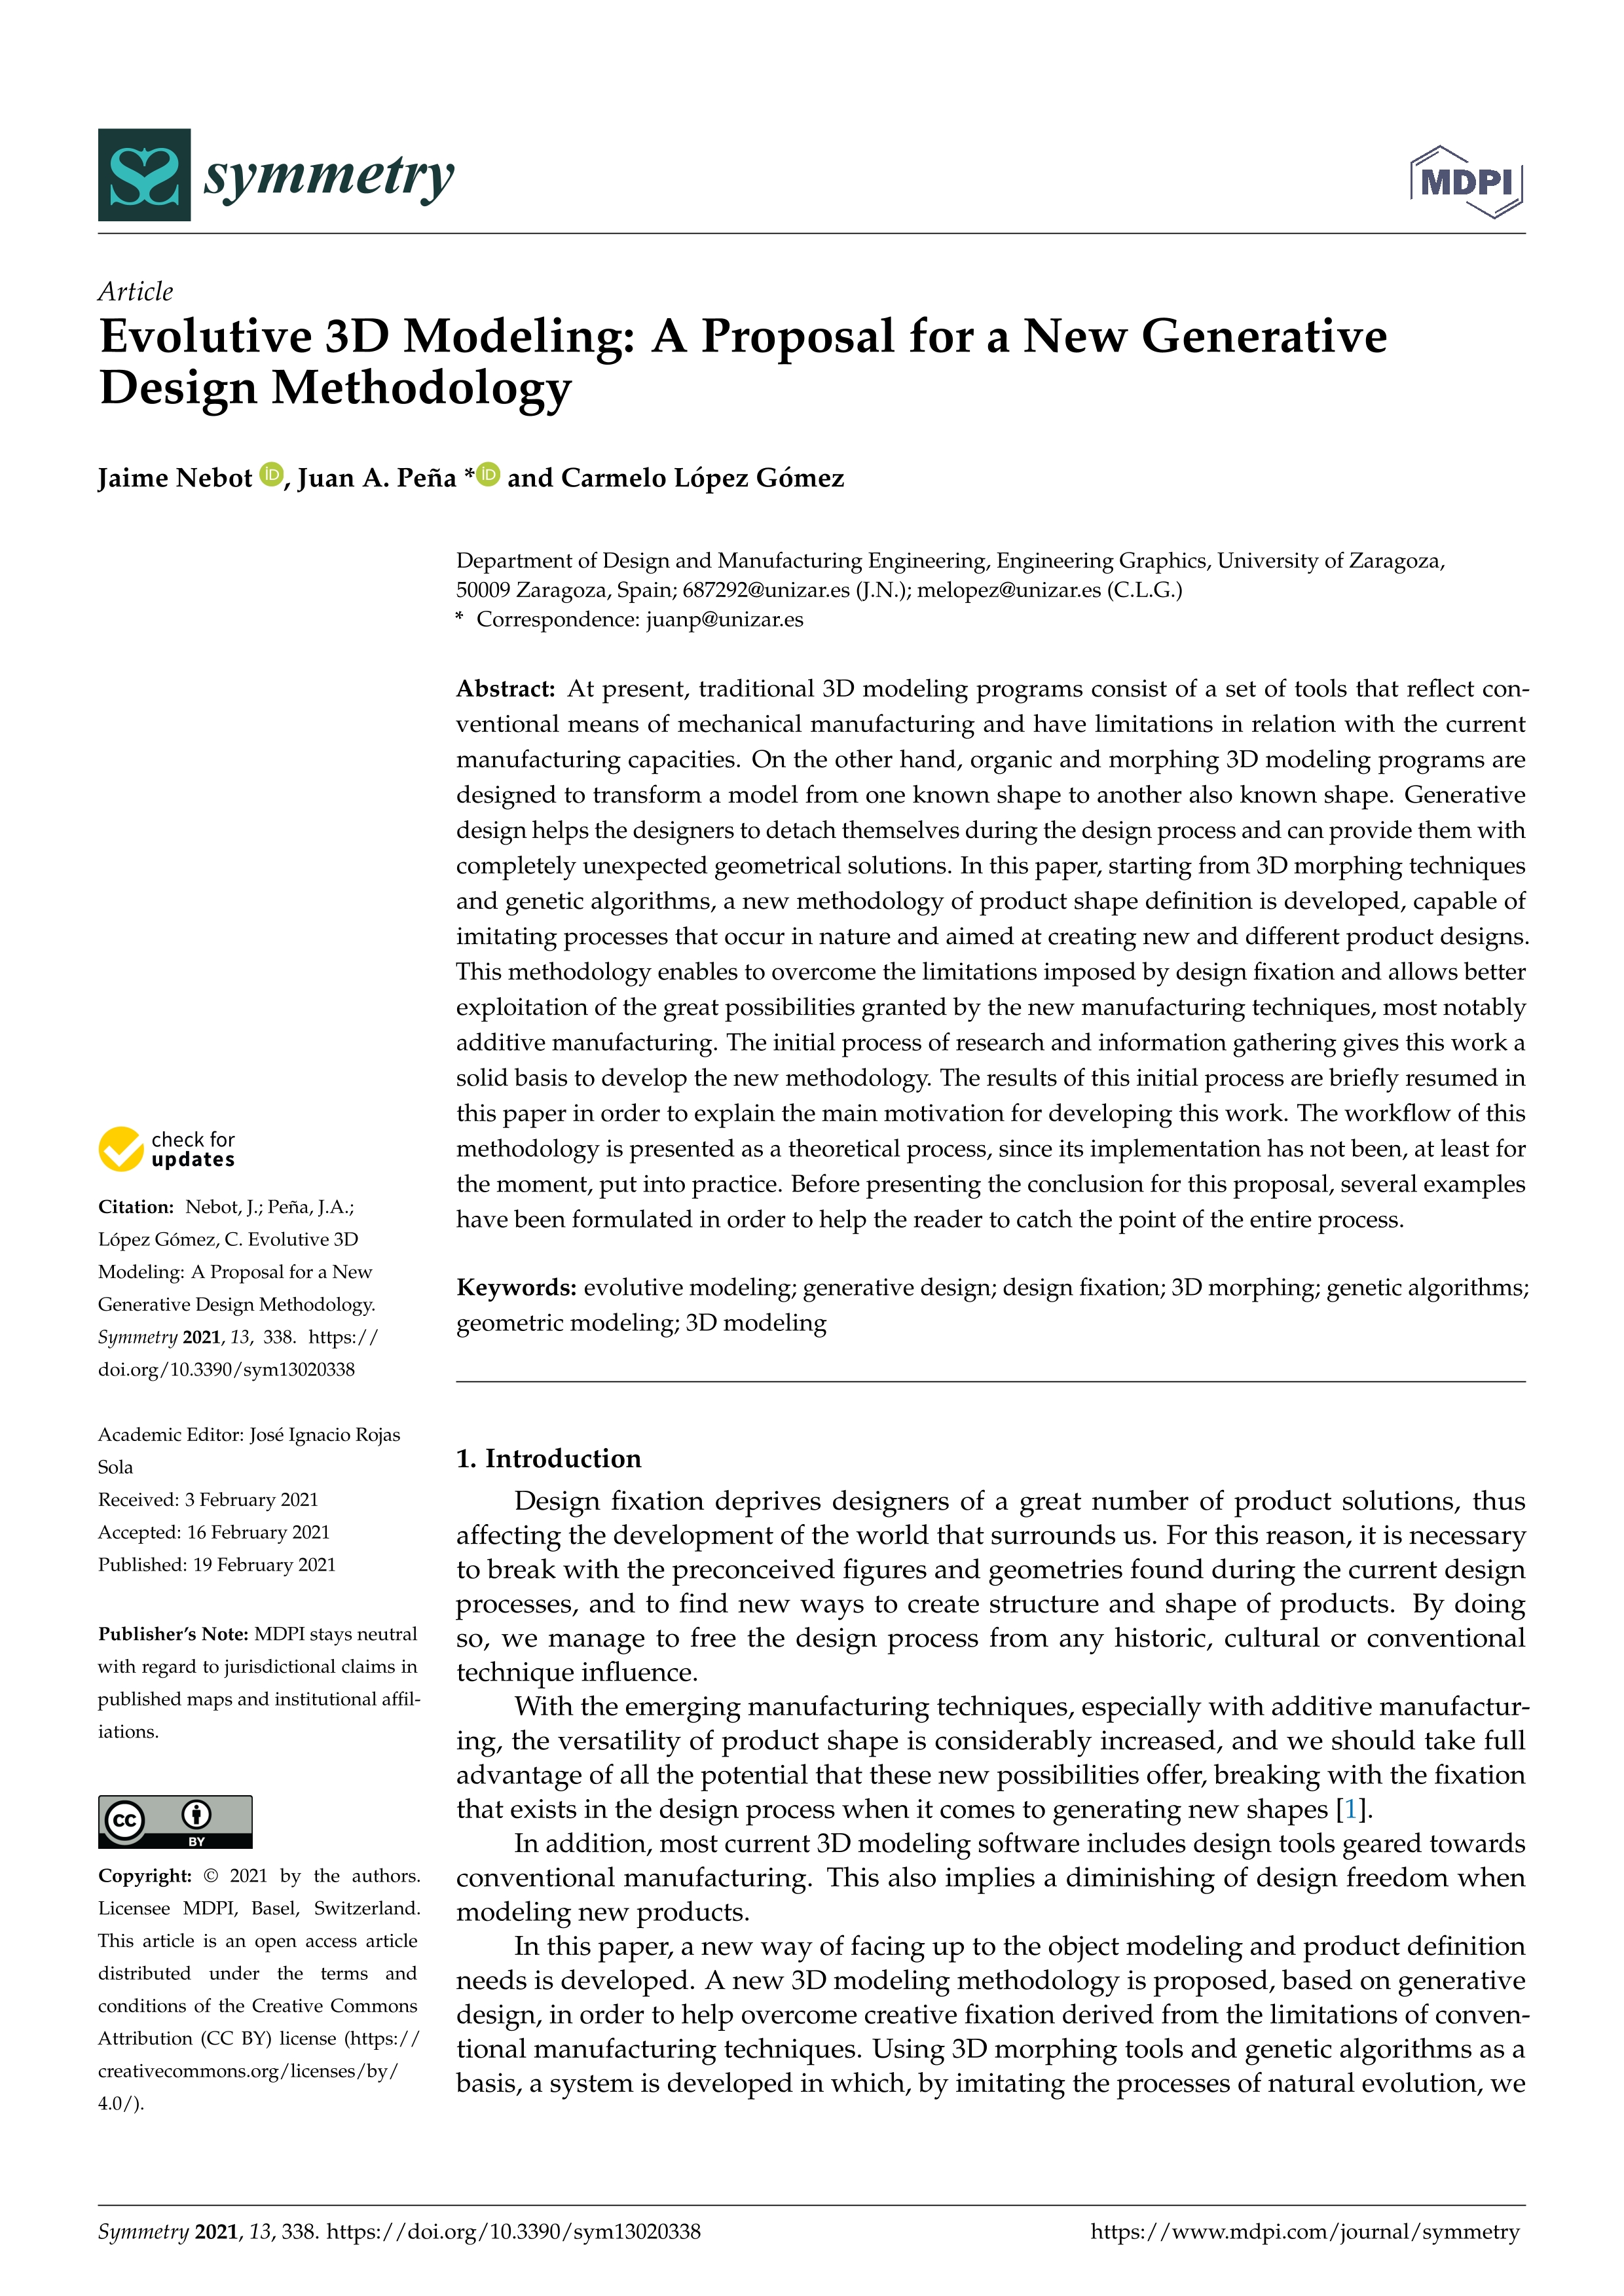 Evolutive 3D modeling: A proposal for a new generative design methodology